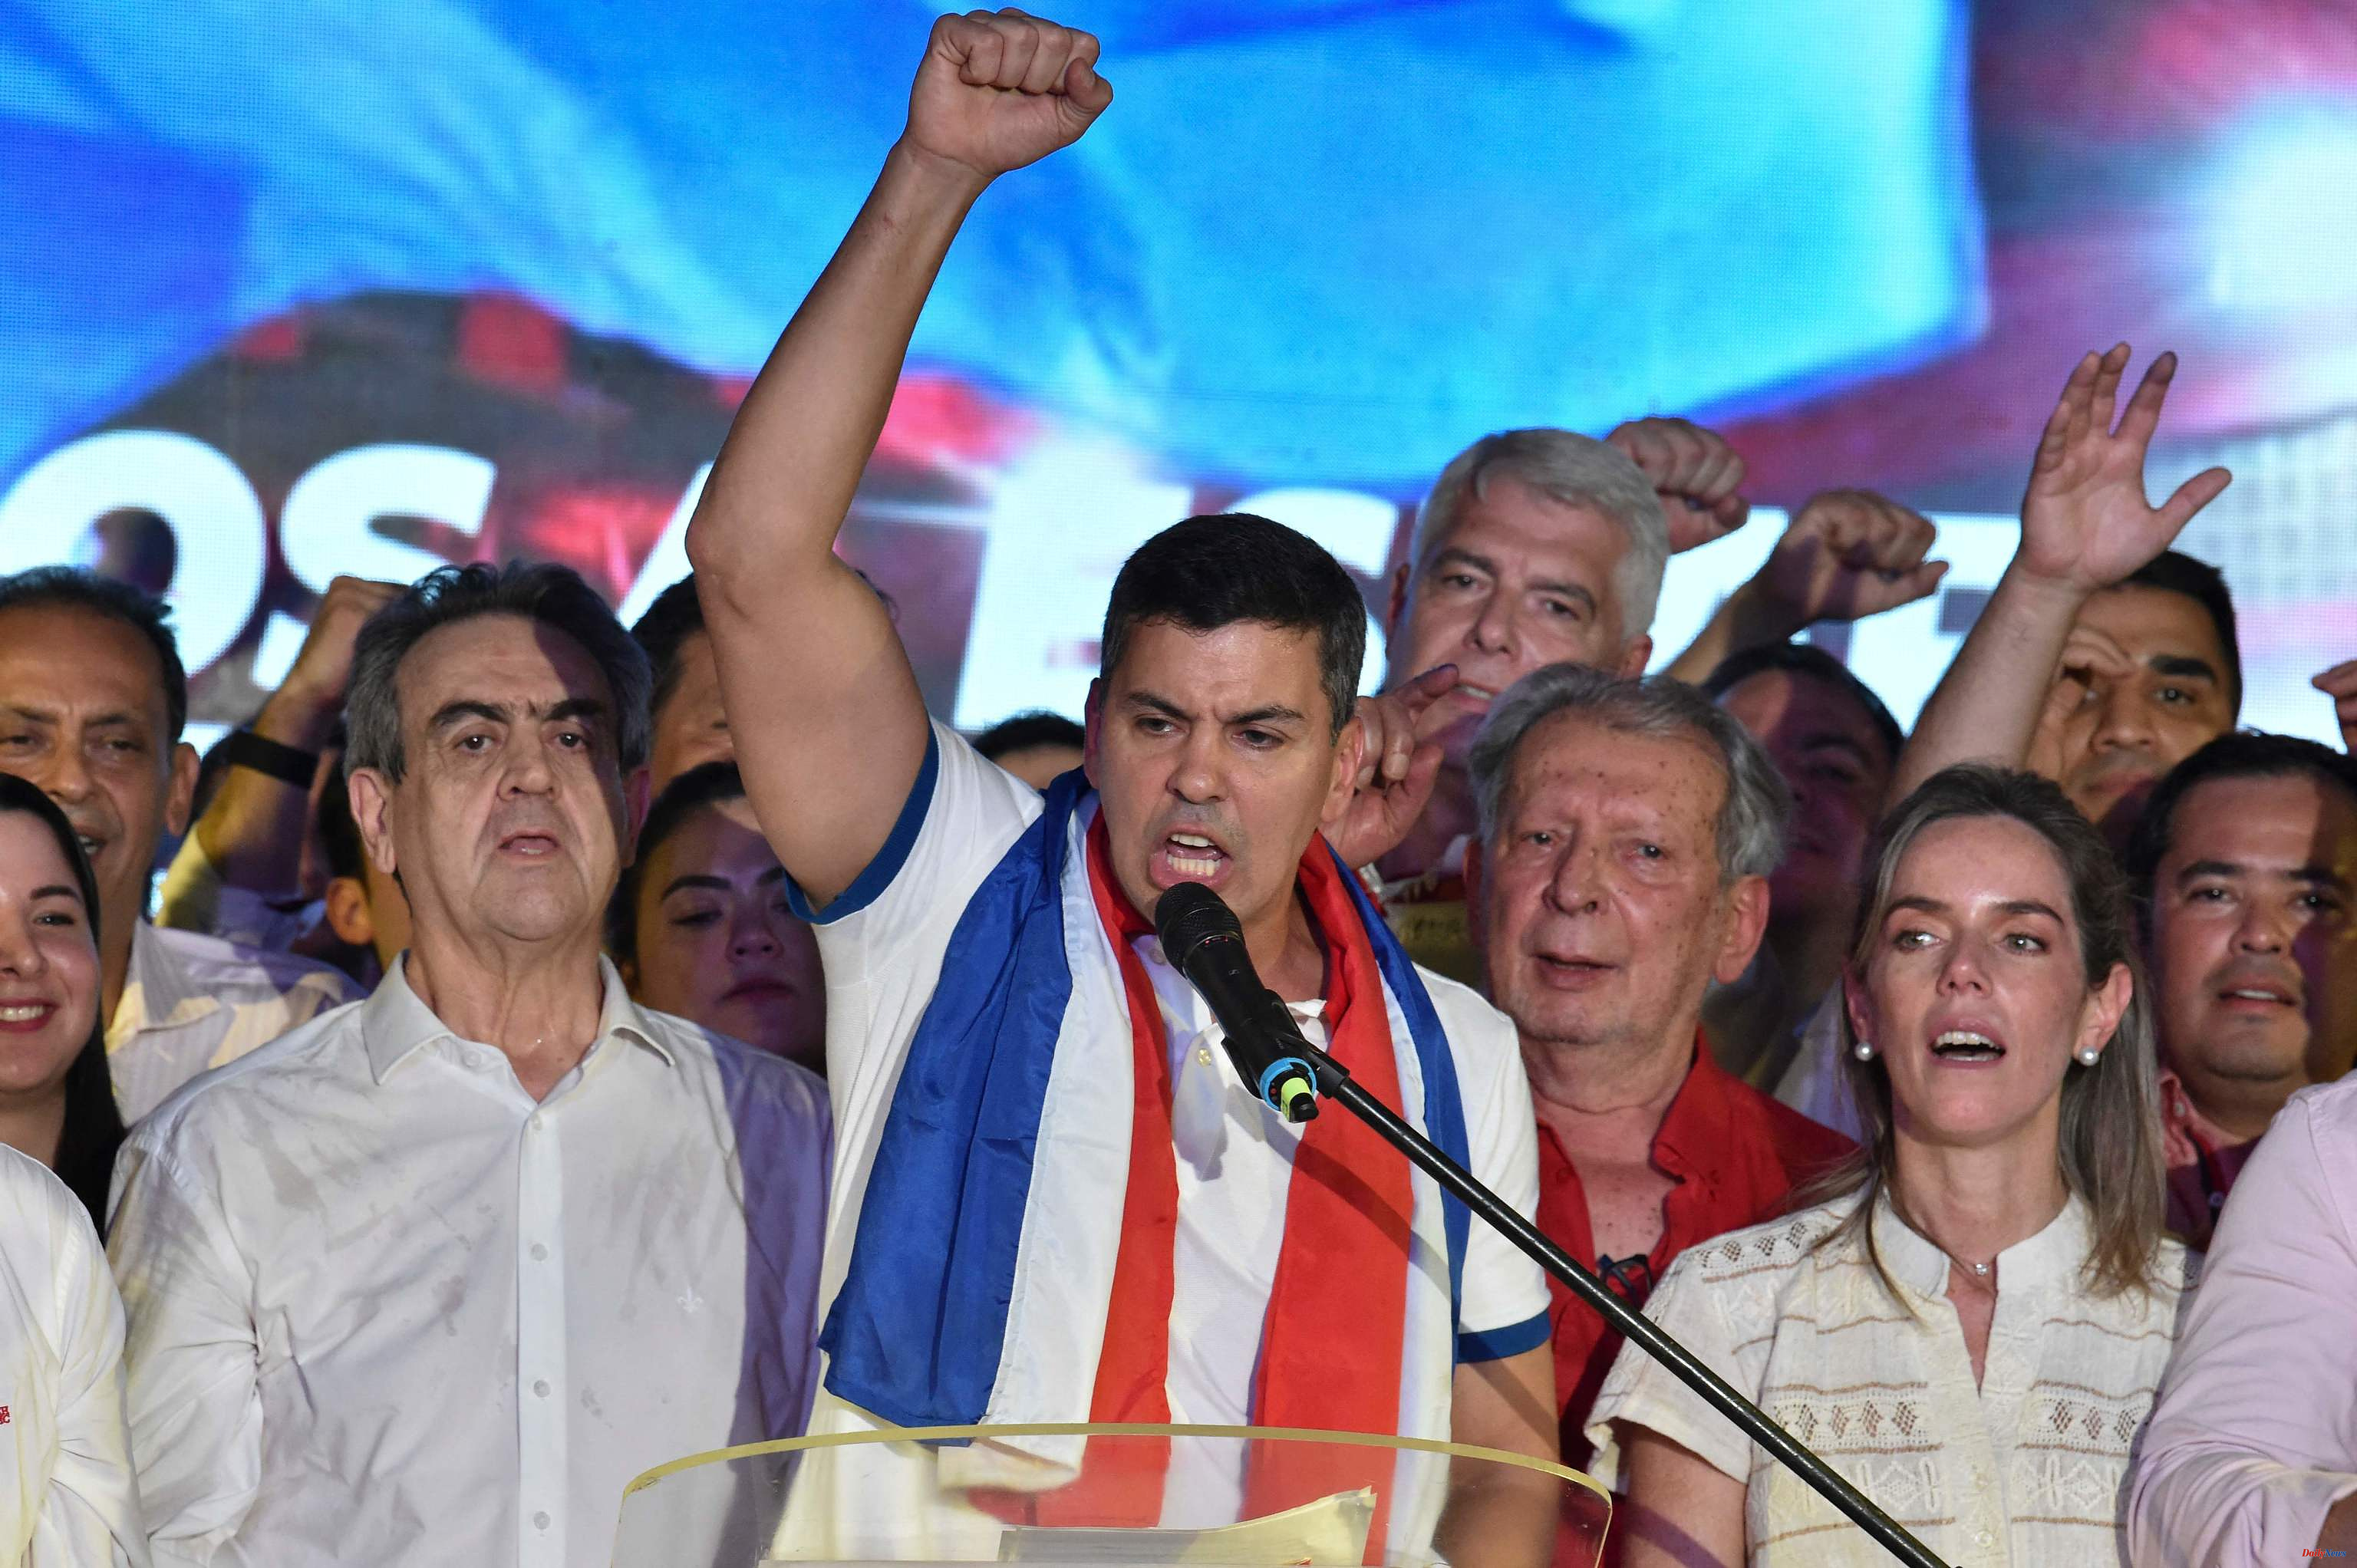 Latin America Cartes' batuta conditions Peña's Presidency in Paraguay